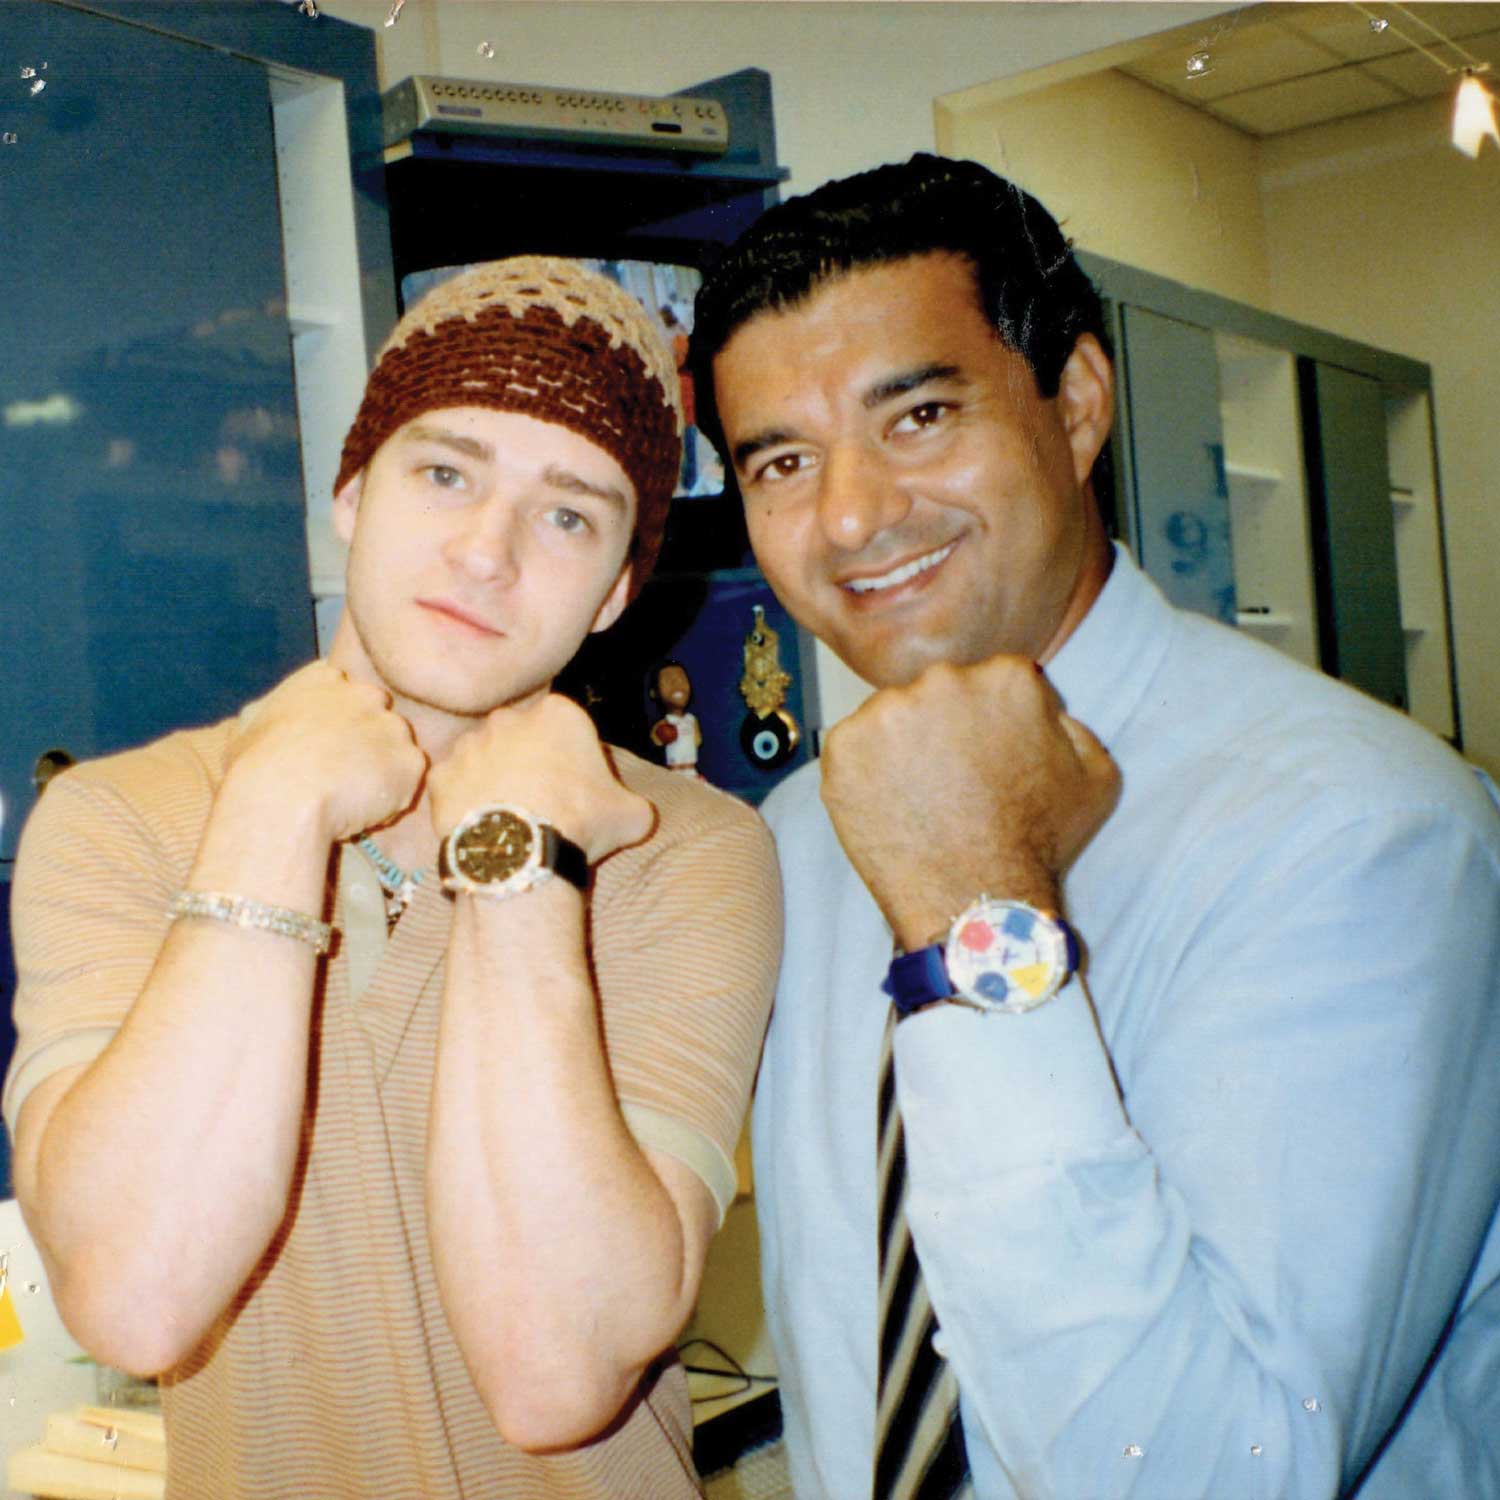 Jacob with Justin Timberlake